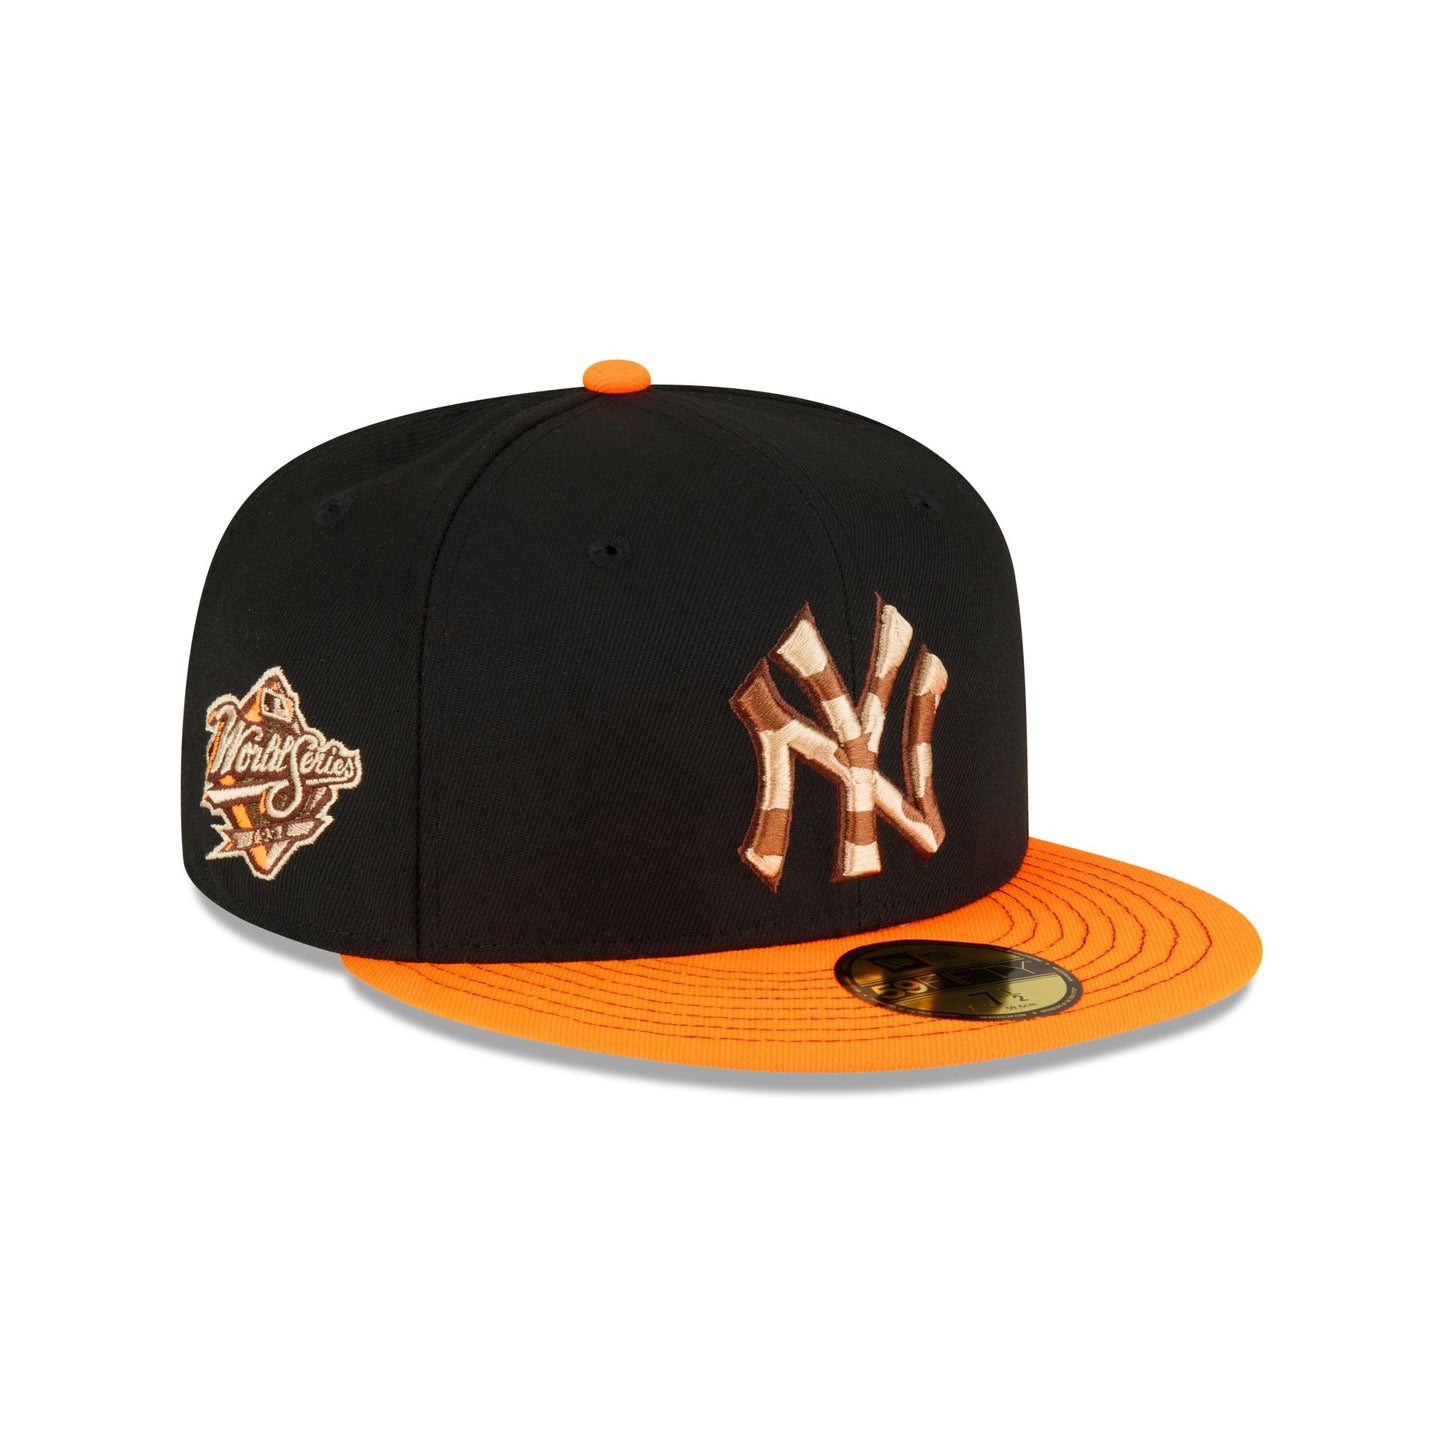 Just Caps Orange Visor Cap Fitted Yankees – Hat New New 59FIFTY Era York